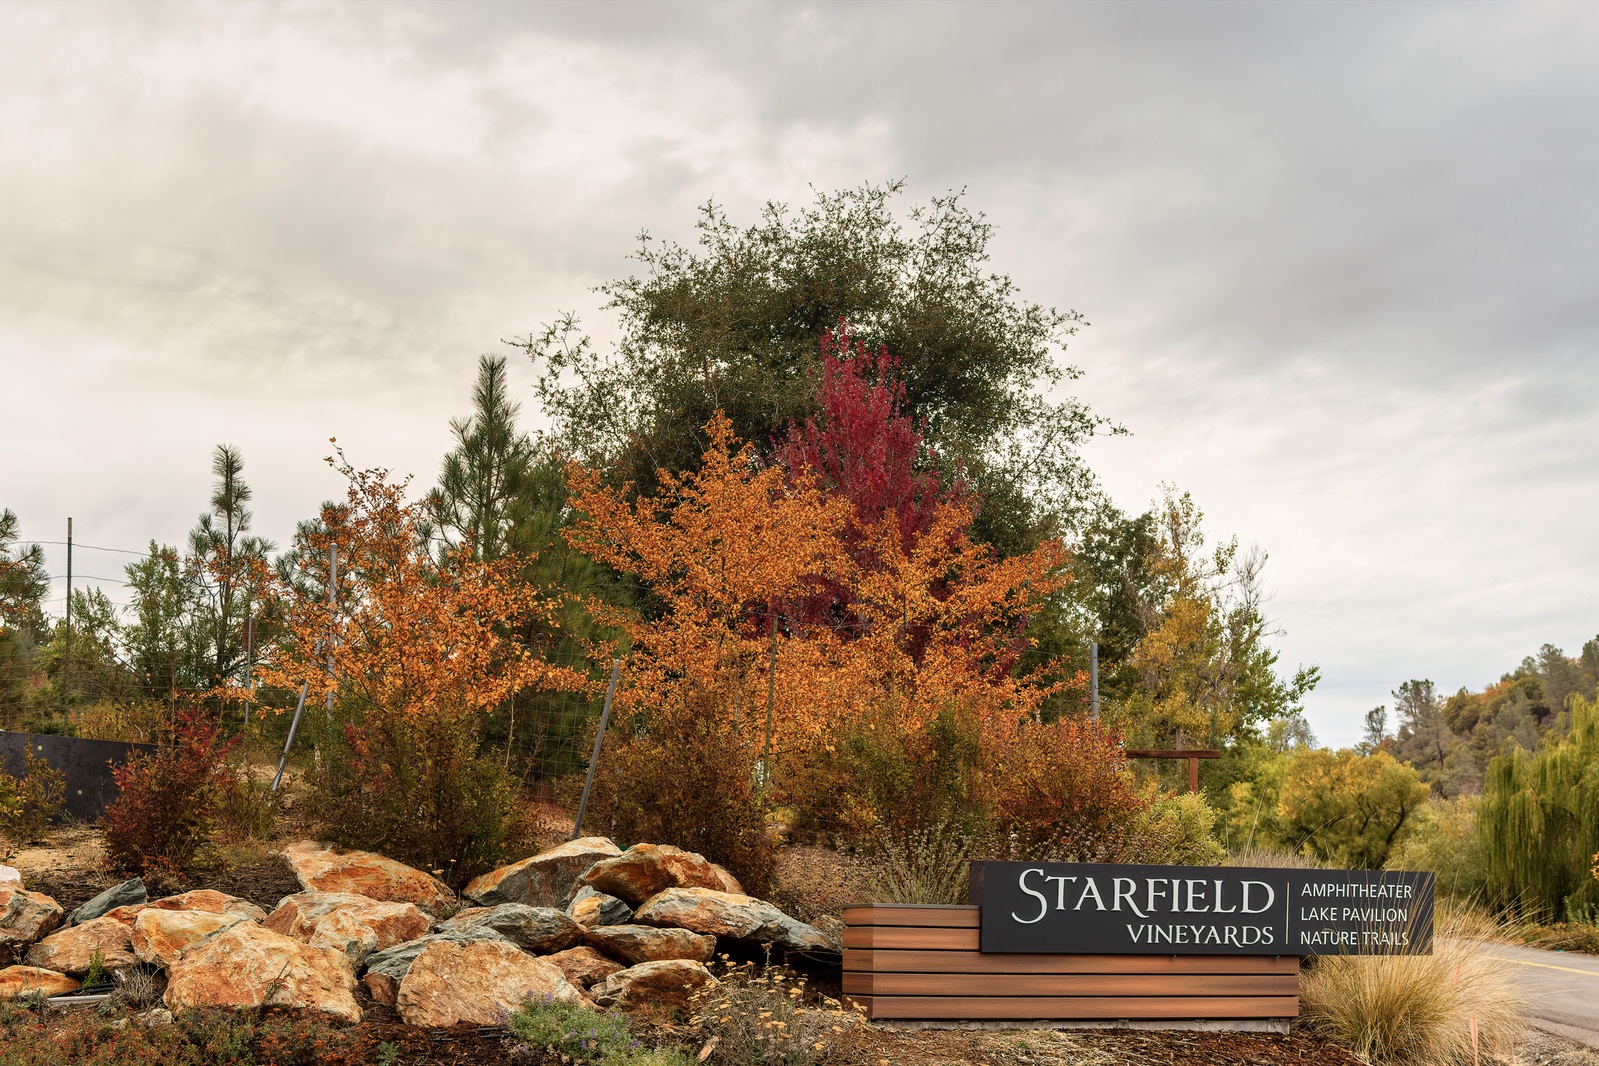 Image of Starfield Vineyards by Karen Schmautz